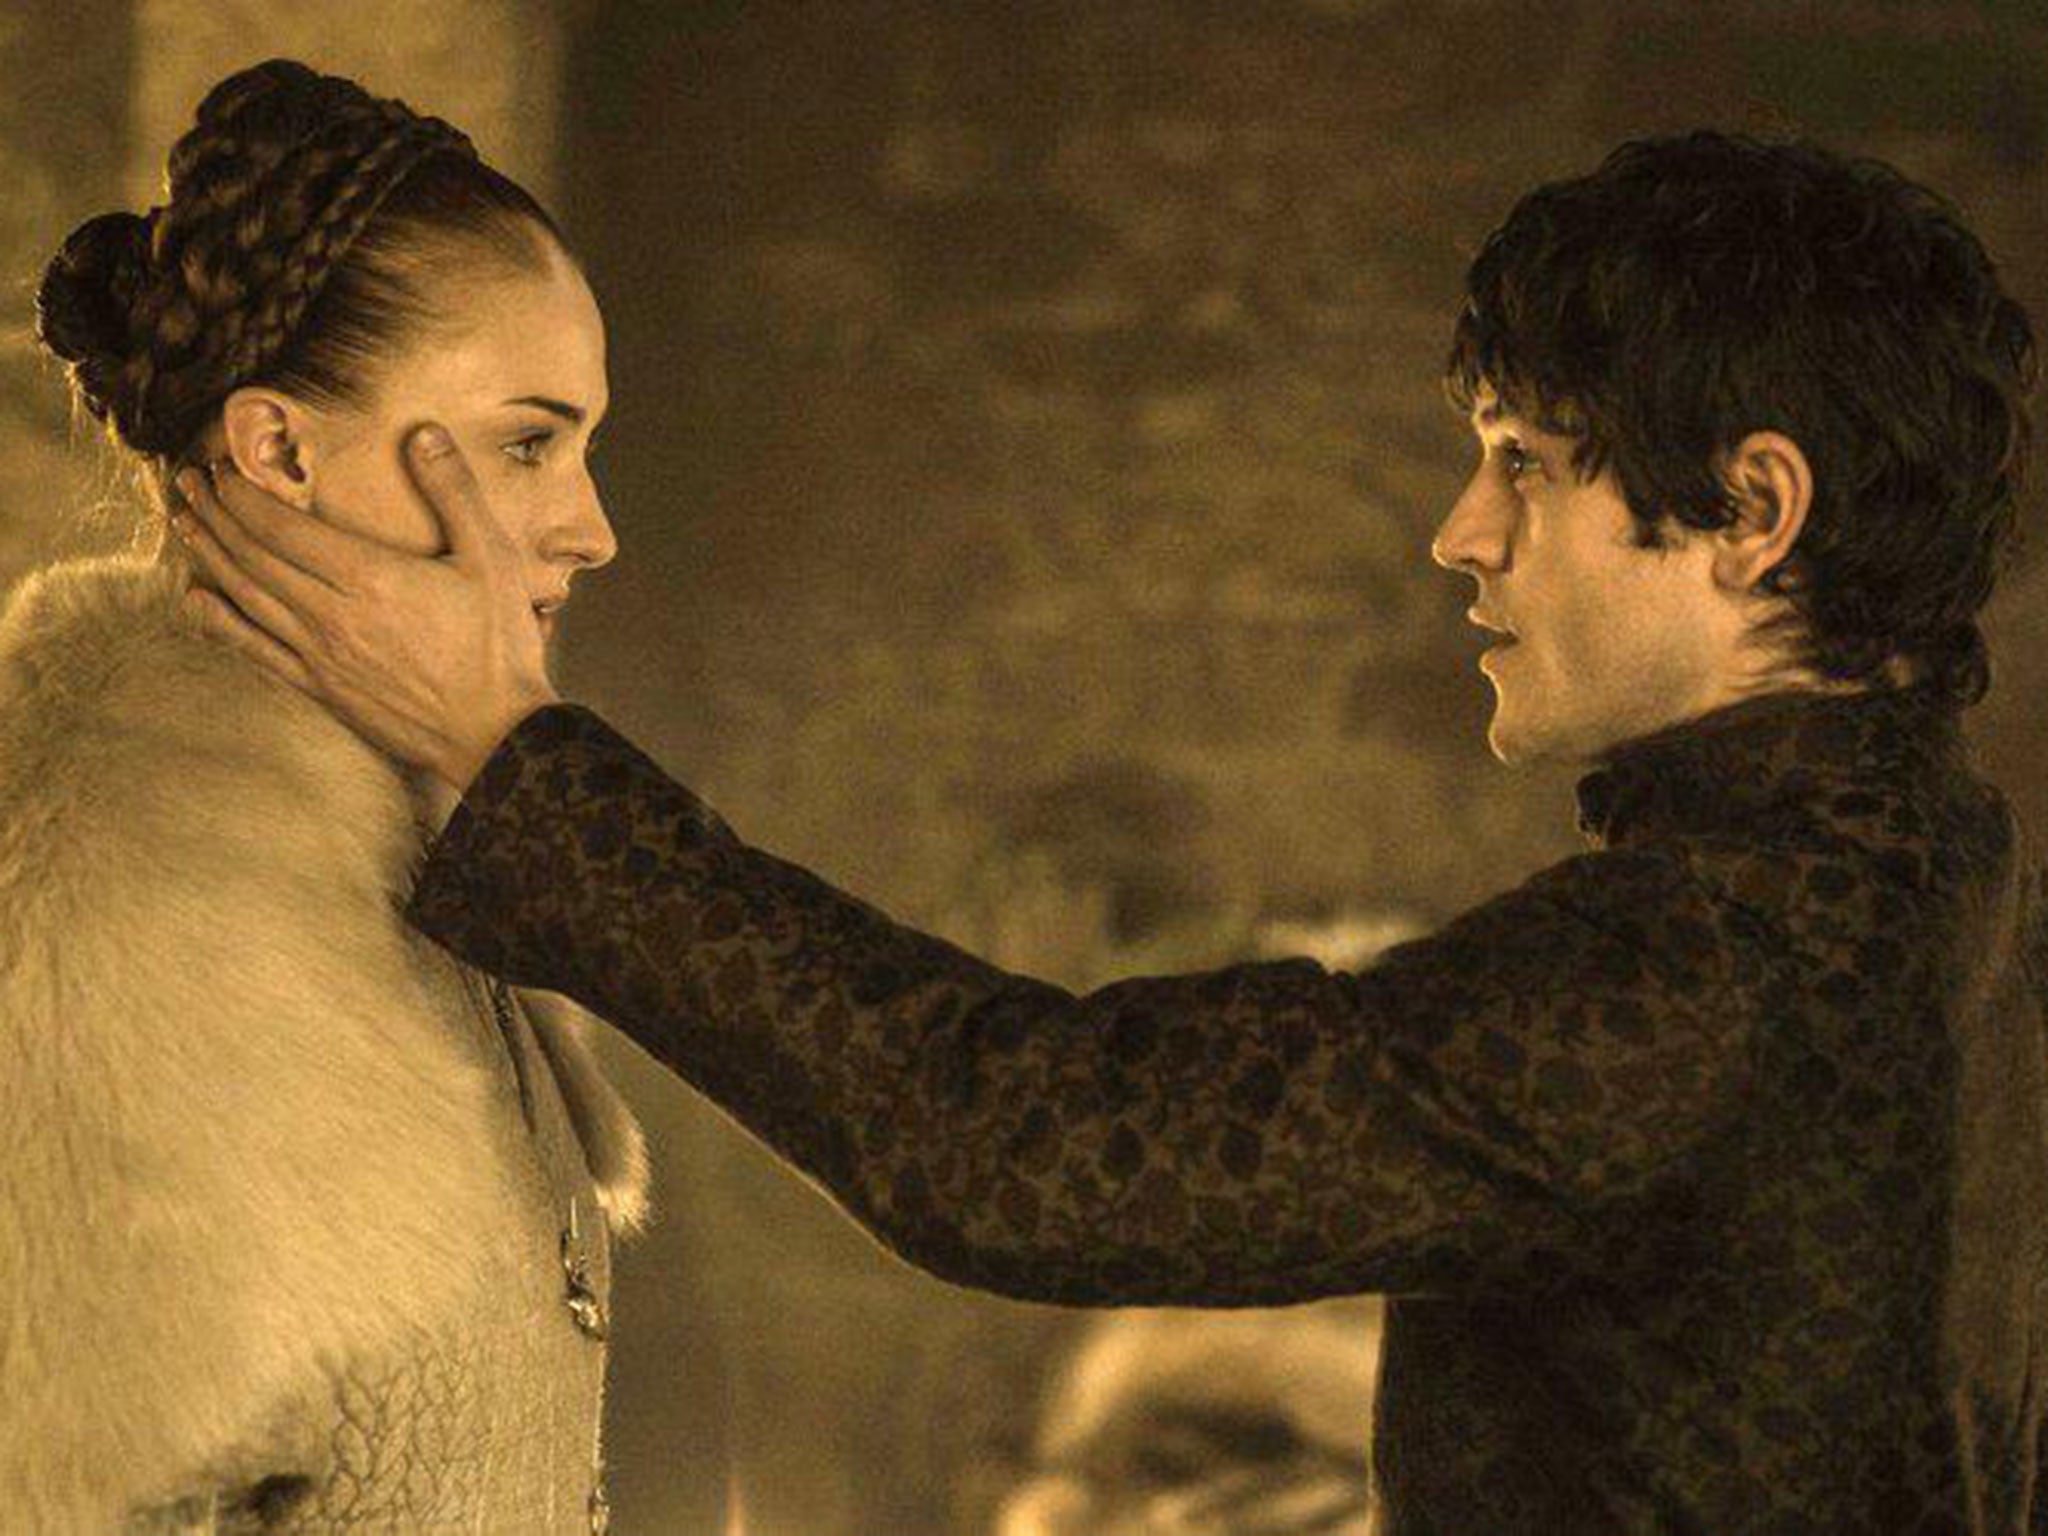 Sansa Stark and Ramsay Bolton in the terrible wedding scene in Game of Thrones season five